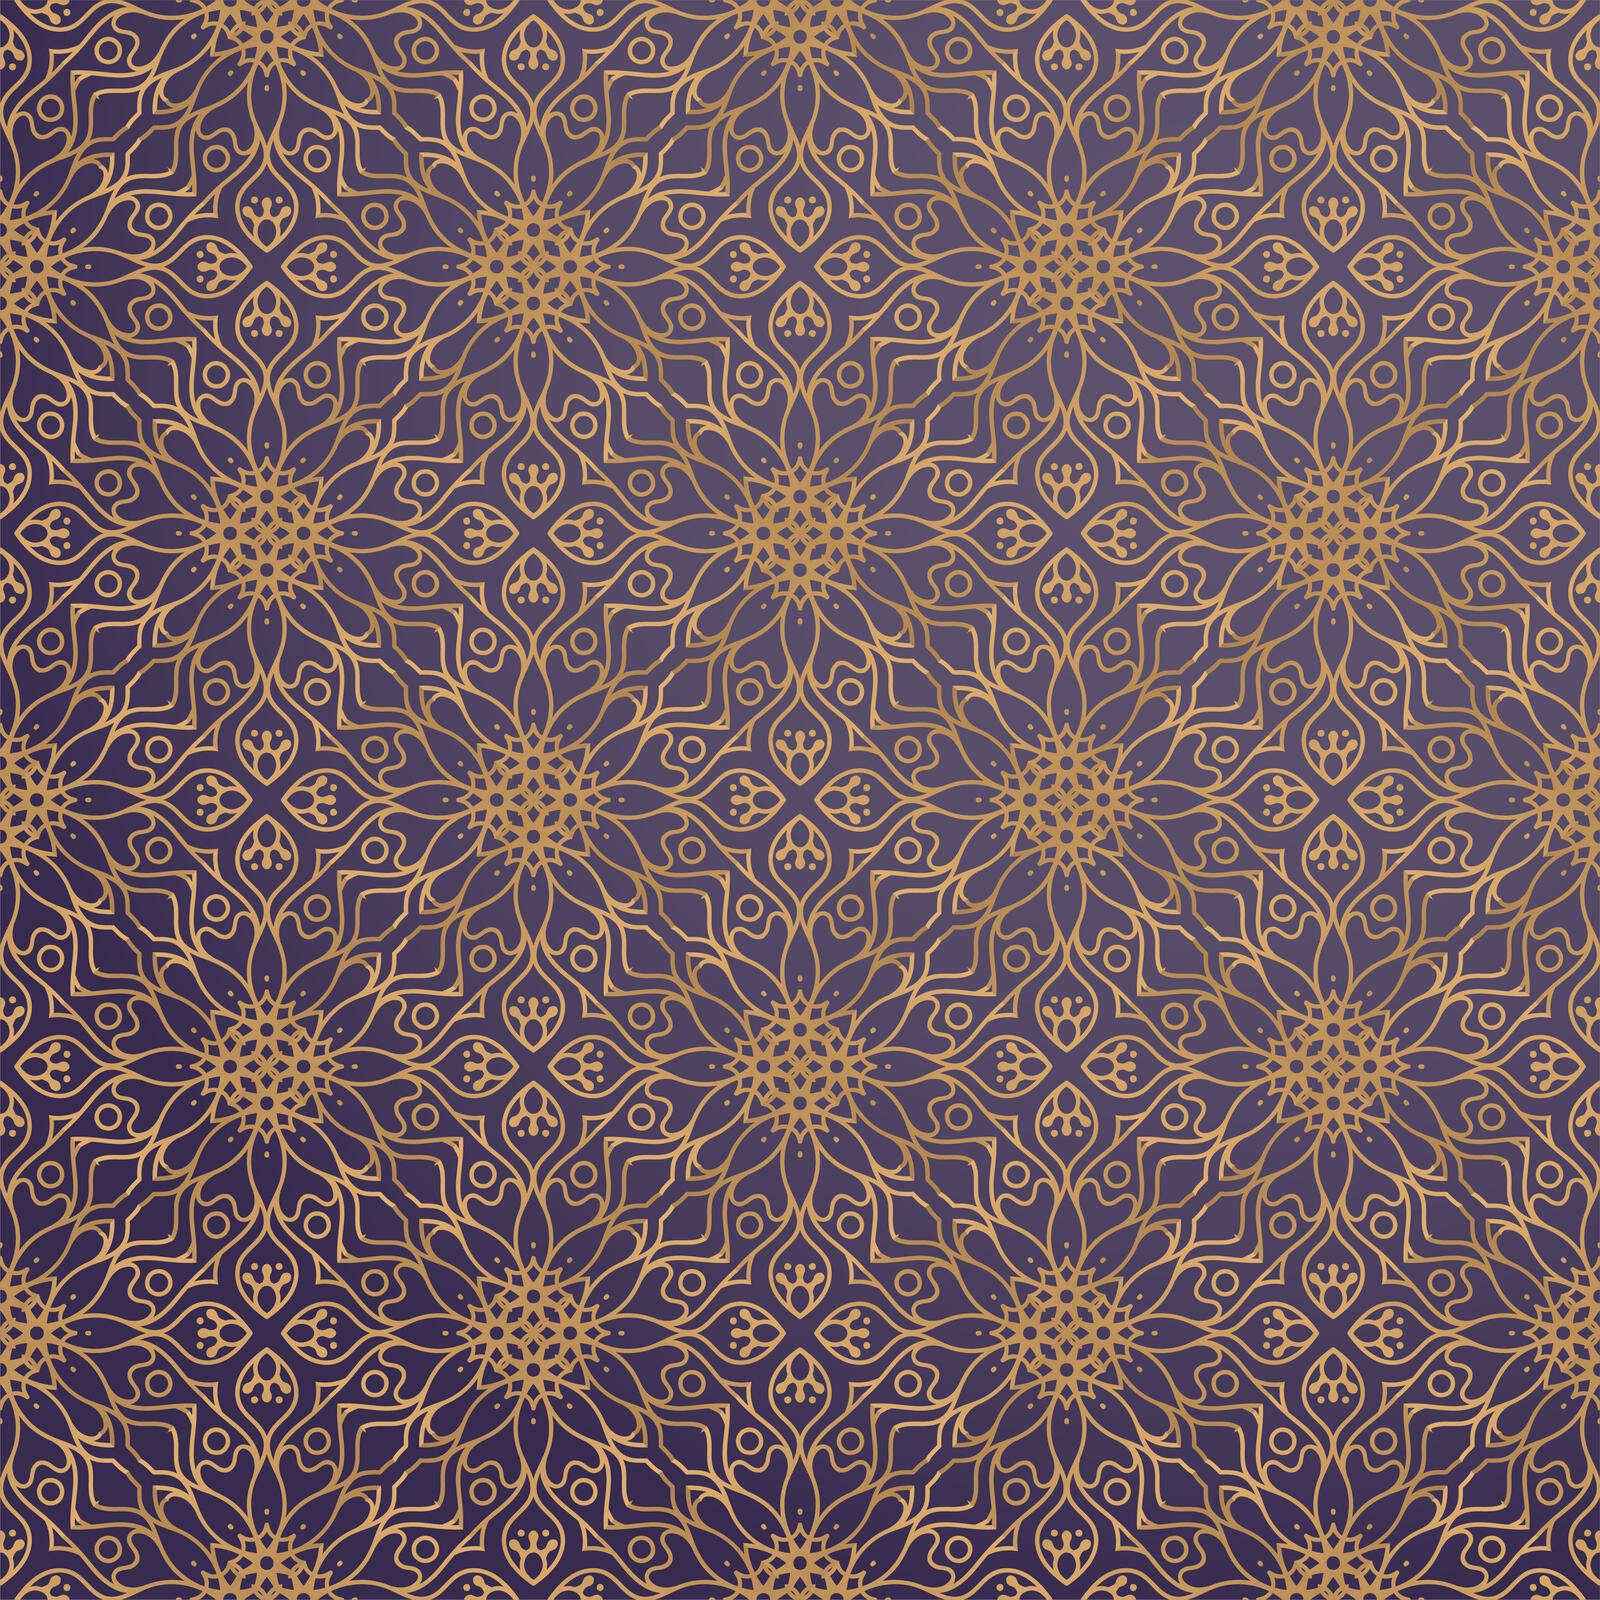 Wallpapers flowers gold pattern on the desktop